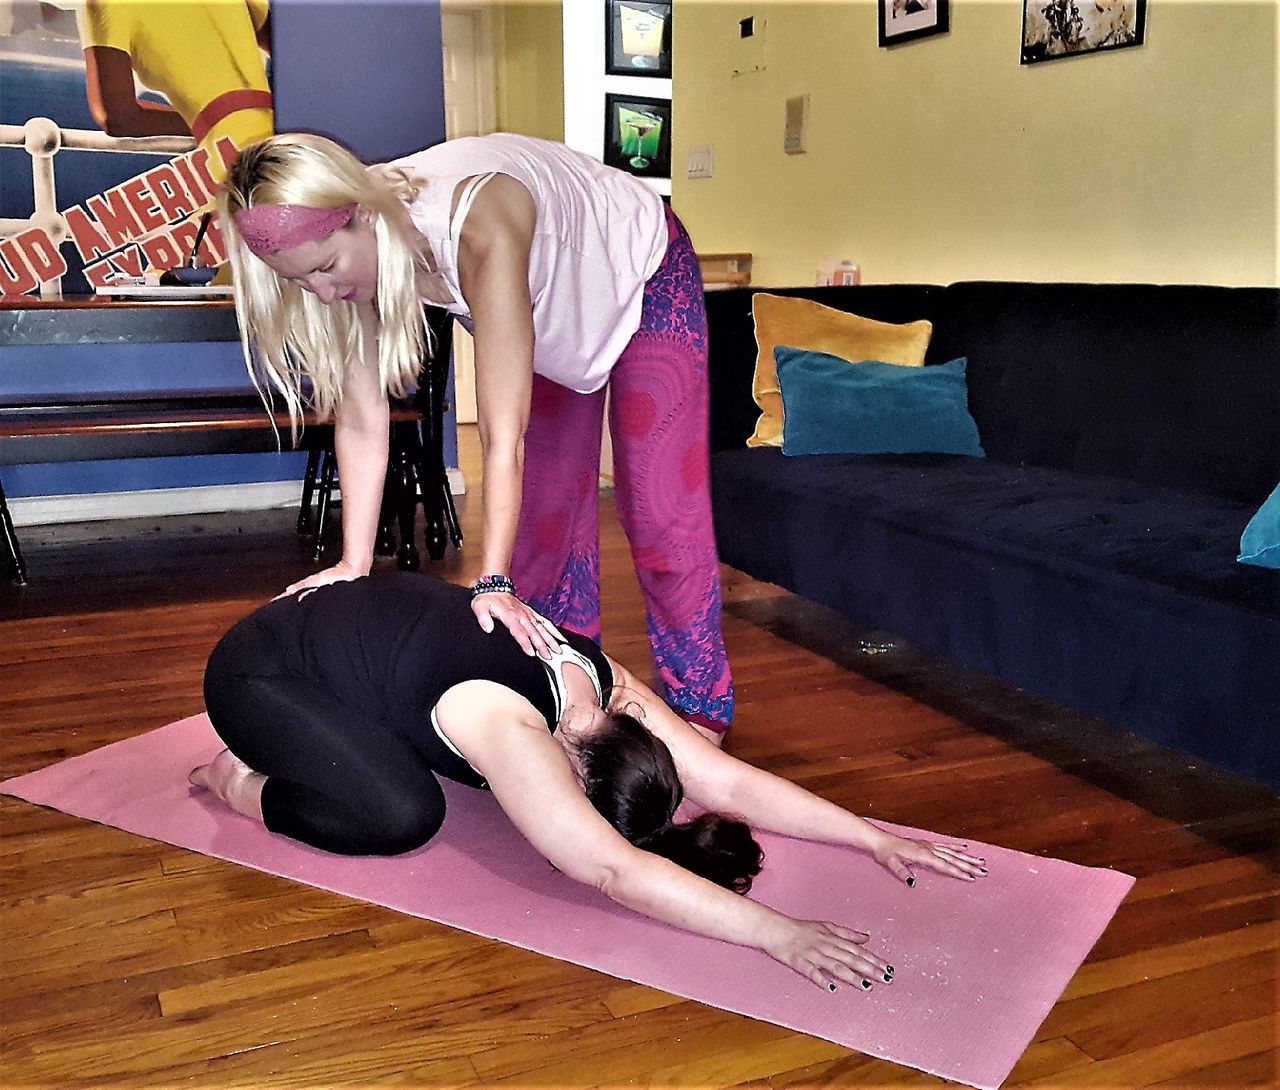 Self-proclaimed ‘yogipreneur’ provides a ‘private yoga experience’